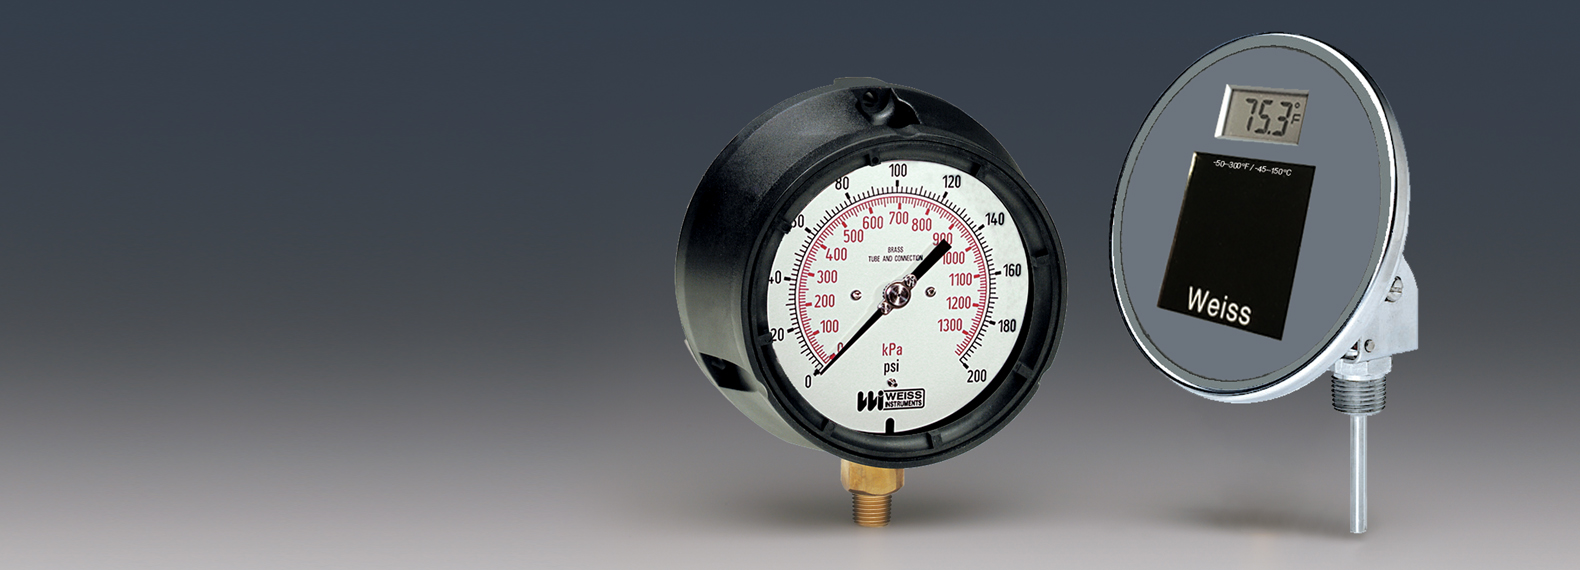 weiss pressure gauge